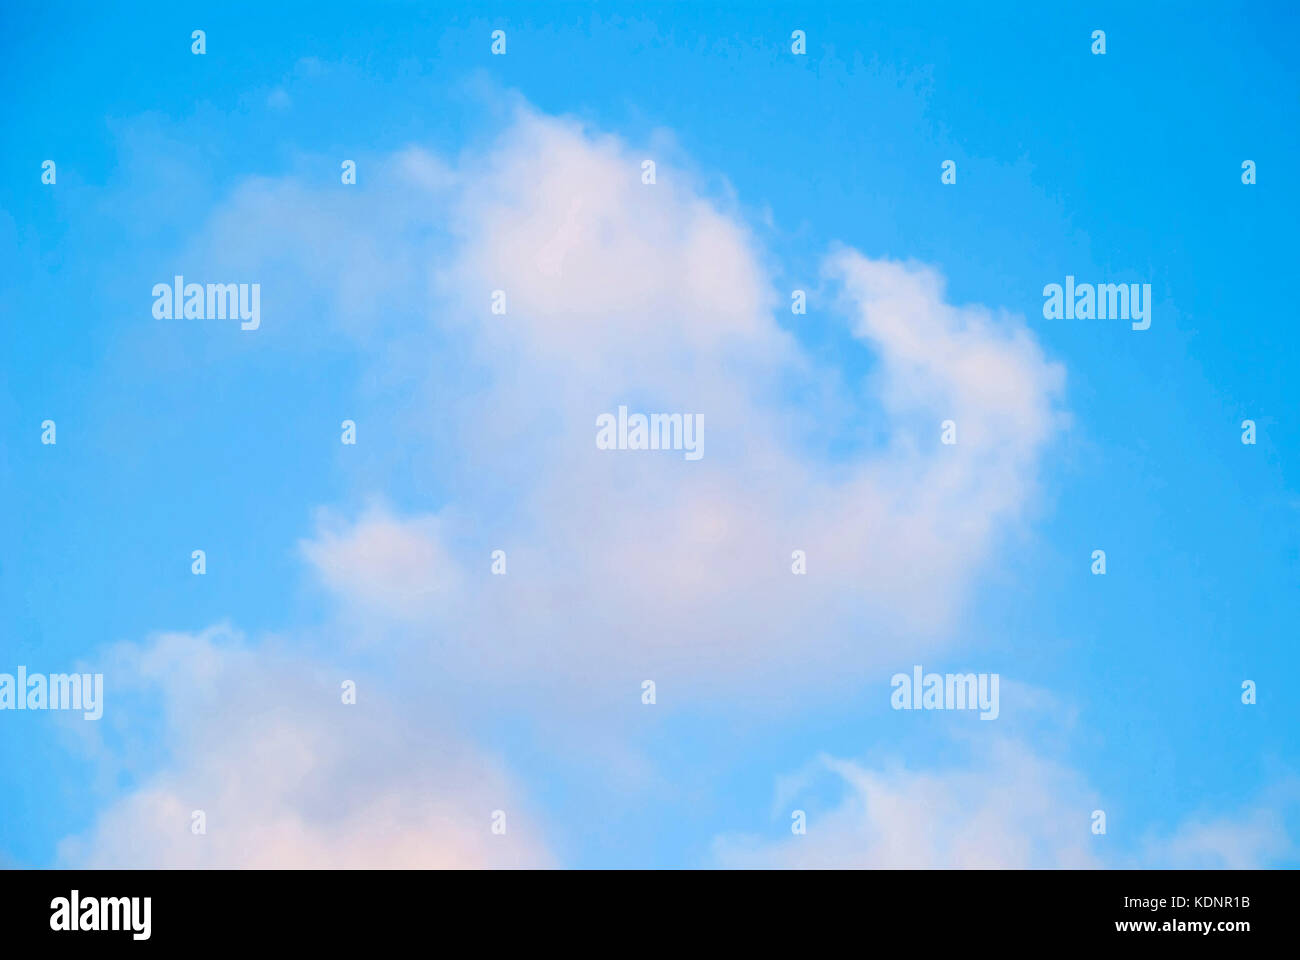 Nube con forma de animal, elefante Stock Photo